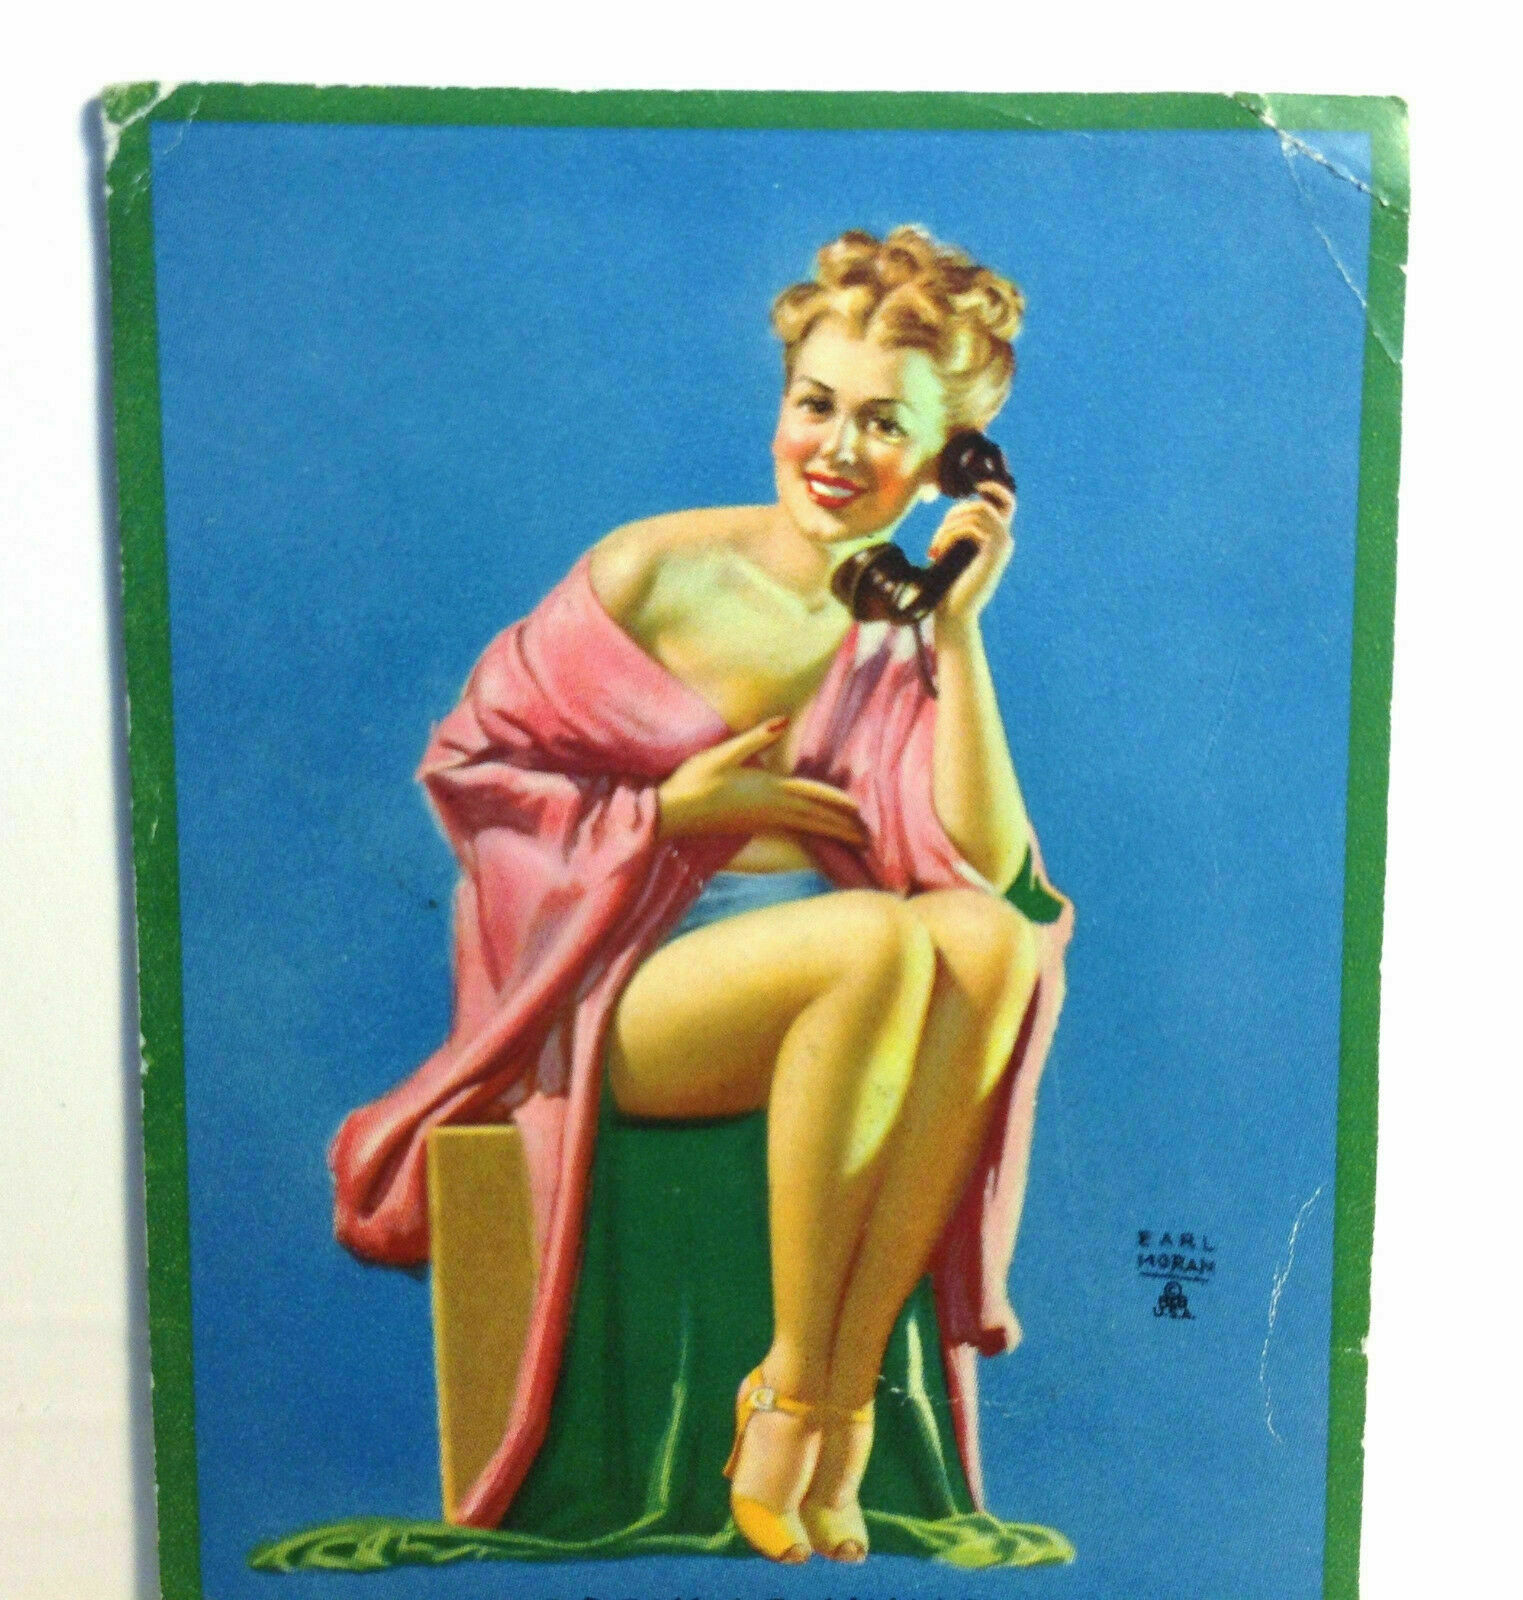 1940s Pinup Girl Art EARL MORAN Ink Blotter Card A Popular Number Phone Blonde